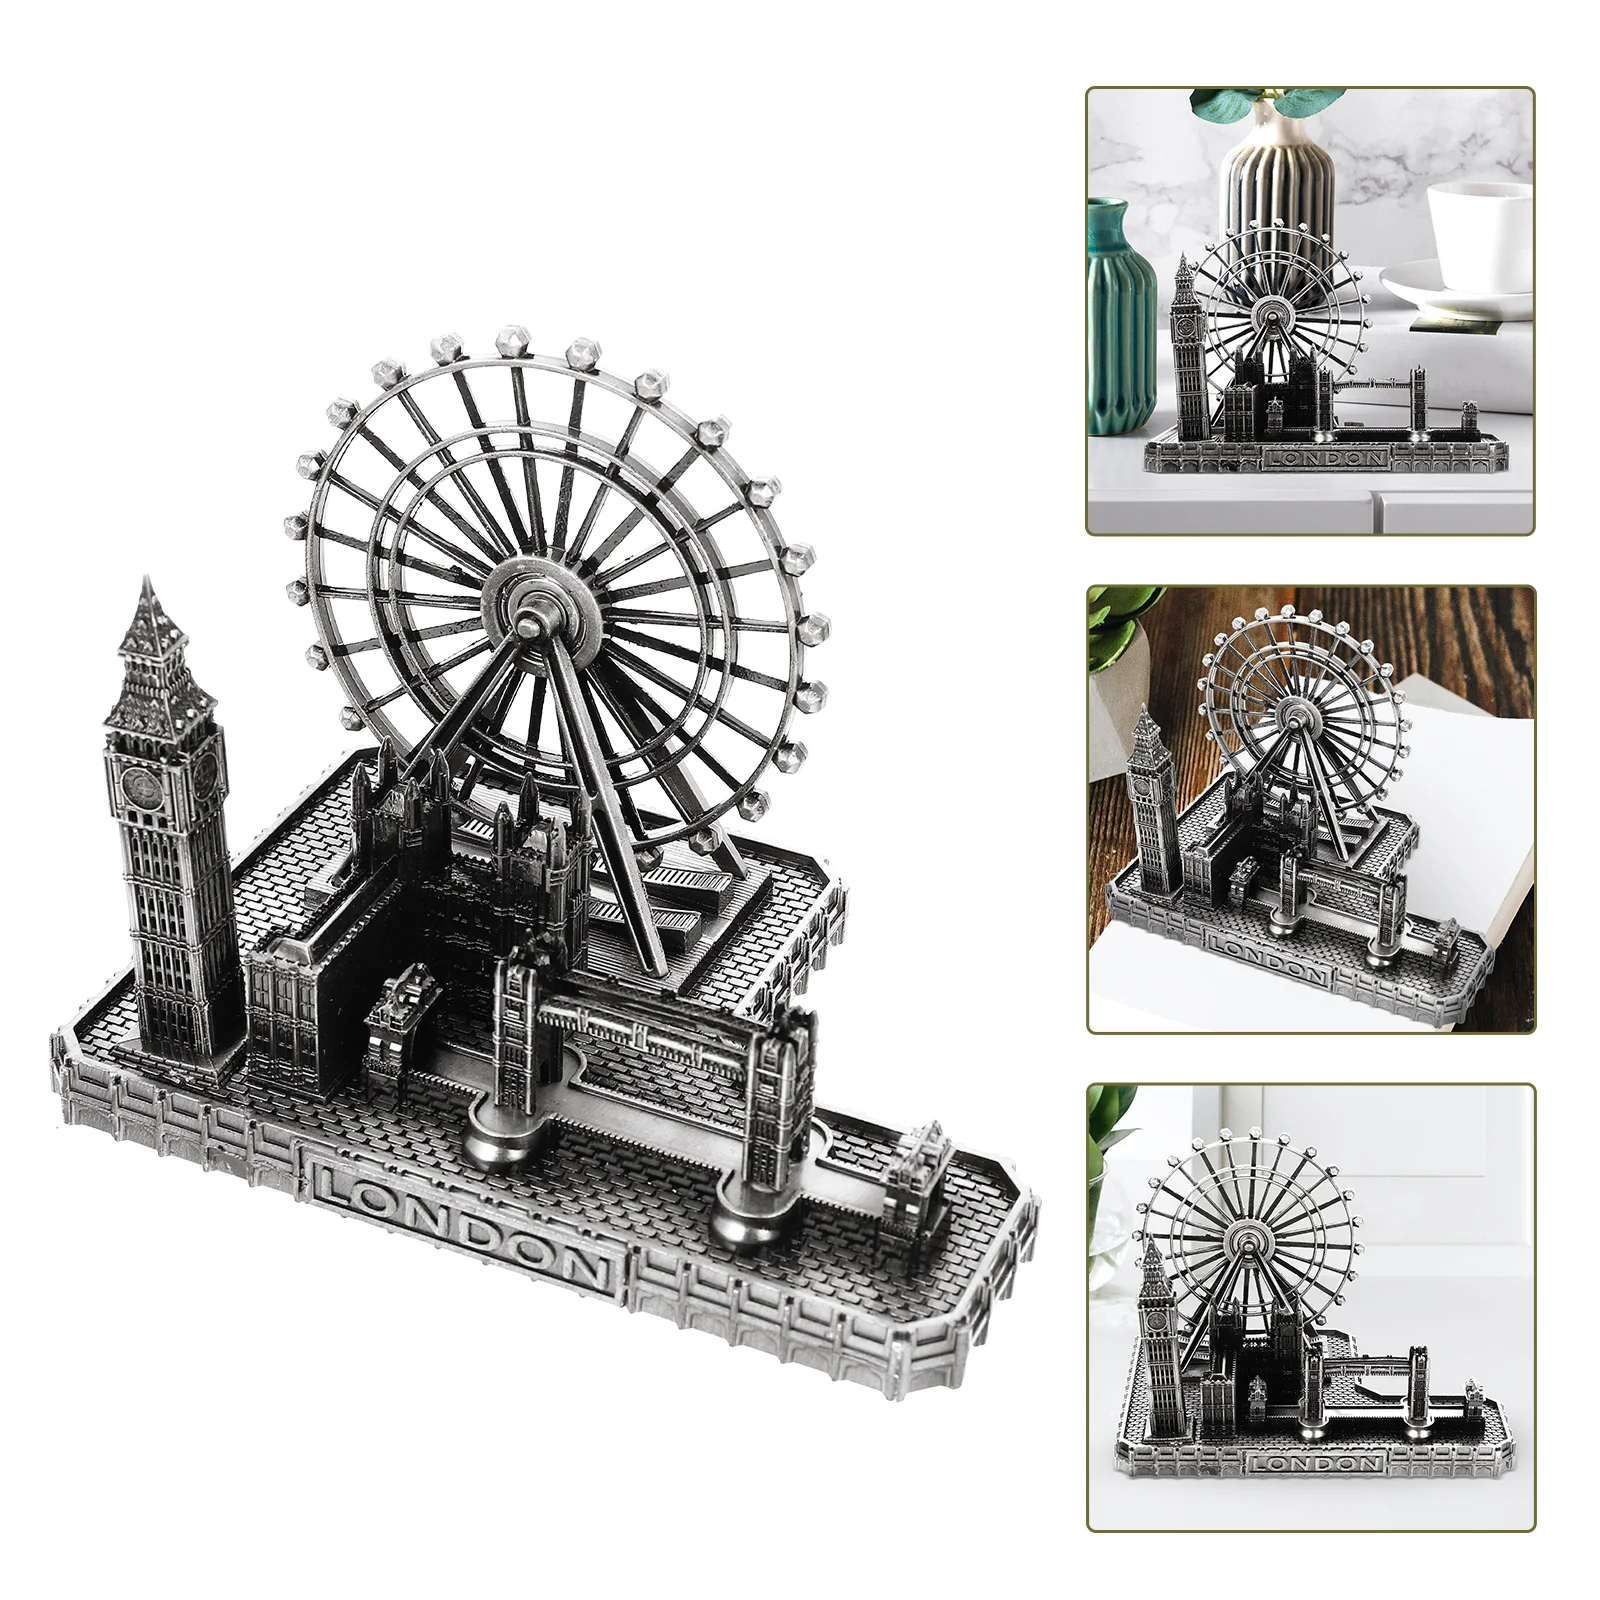 

London Model Tower Bridge City Famous Big Ben Buildings Architecture Clock Figurine Statue British Sculpture Souvenir Scene